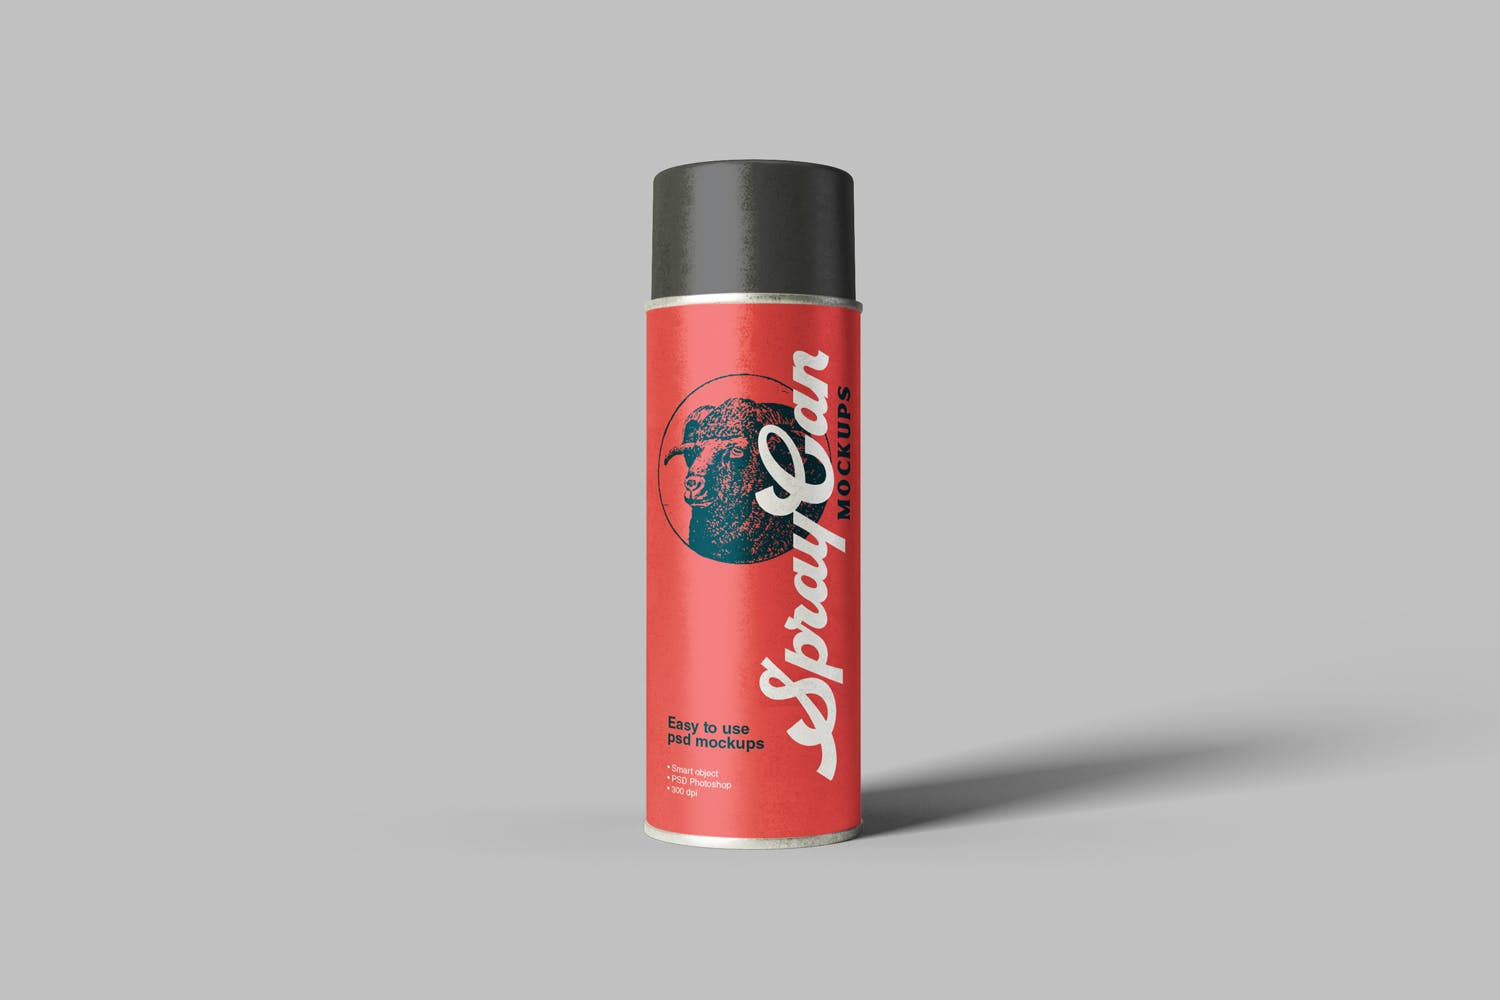 液压喷雾罐外观设计样机模板 Spray Can Mockups插图(2)